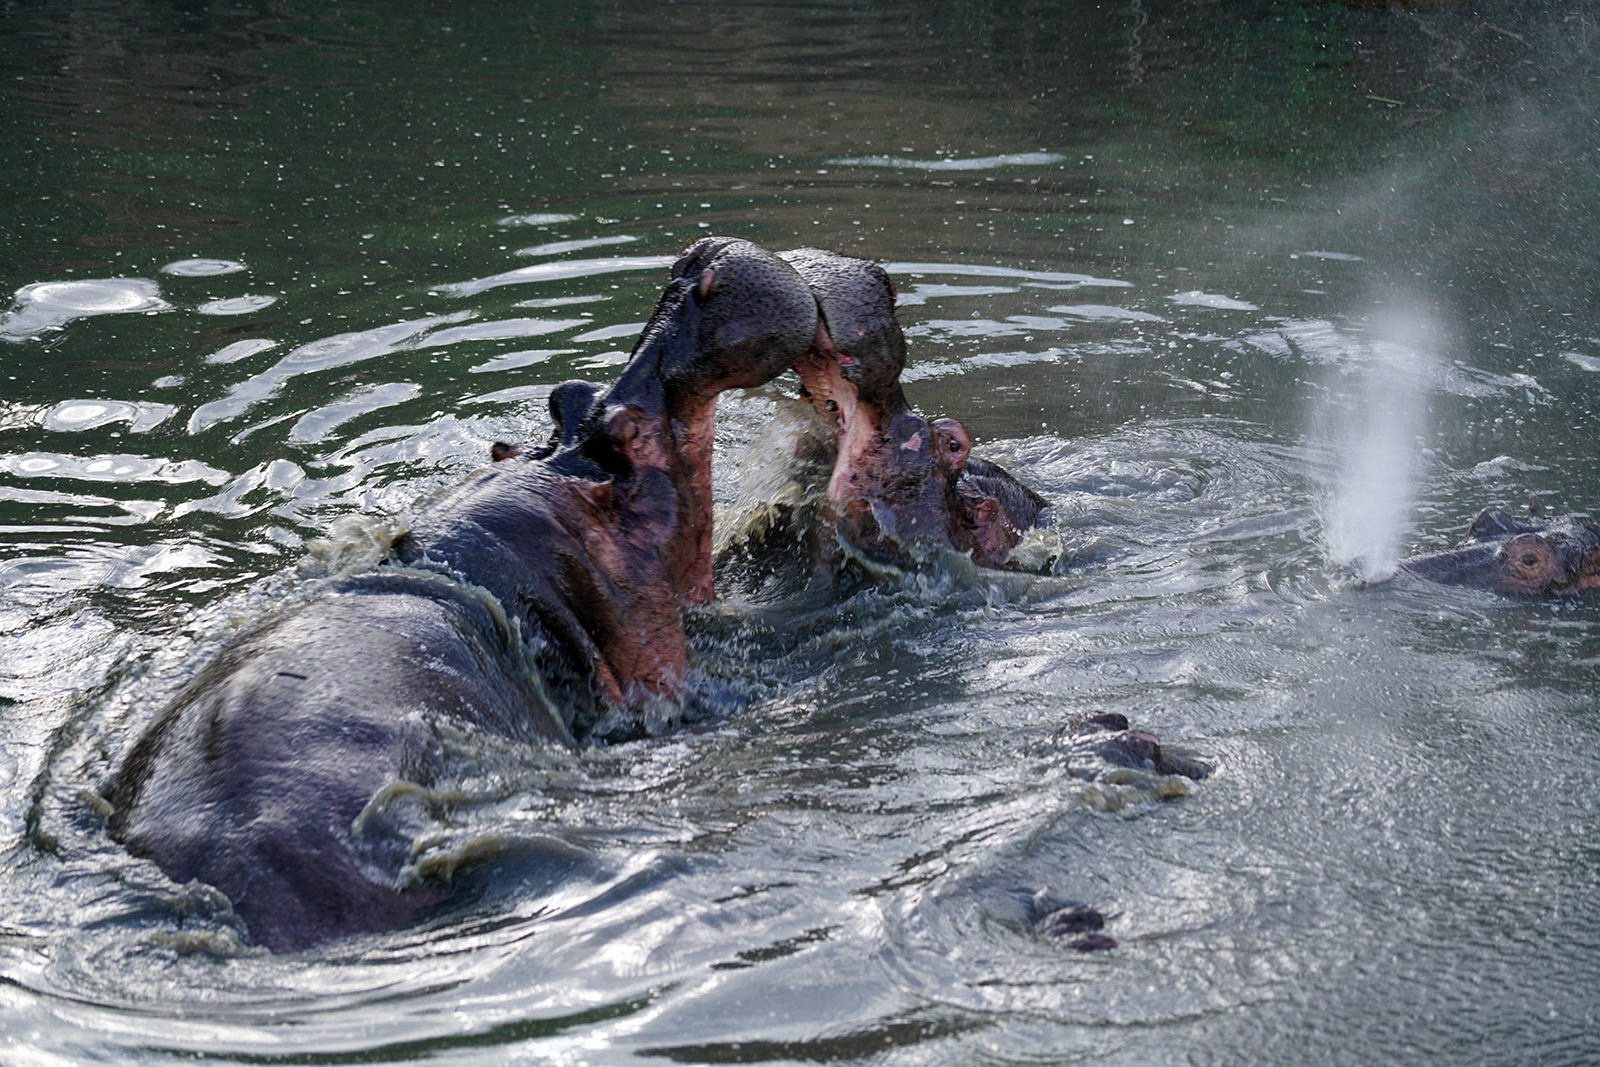 Hippos are kinda scary